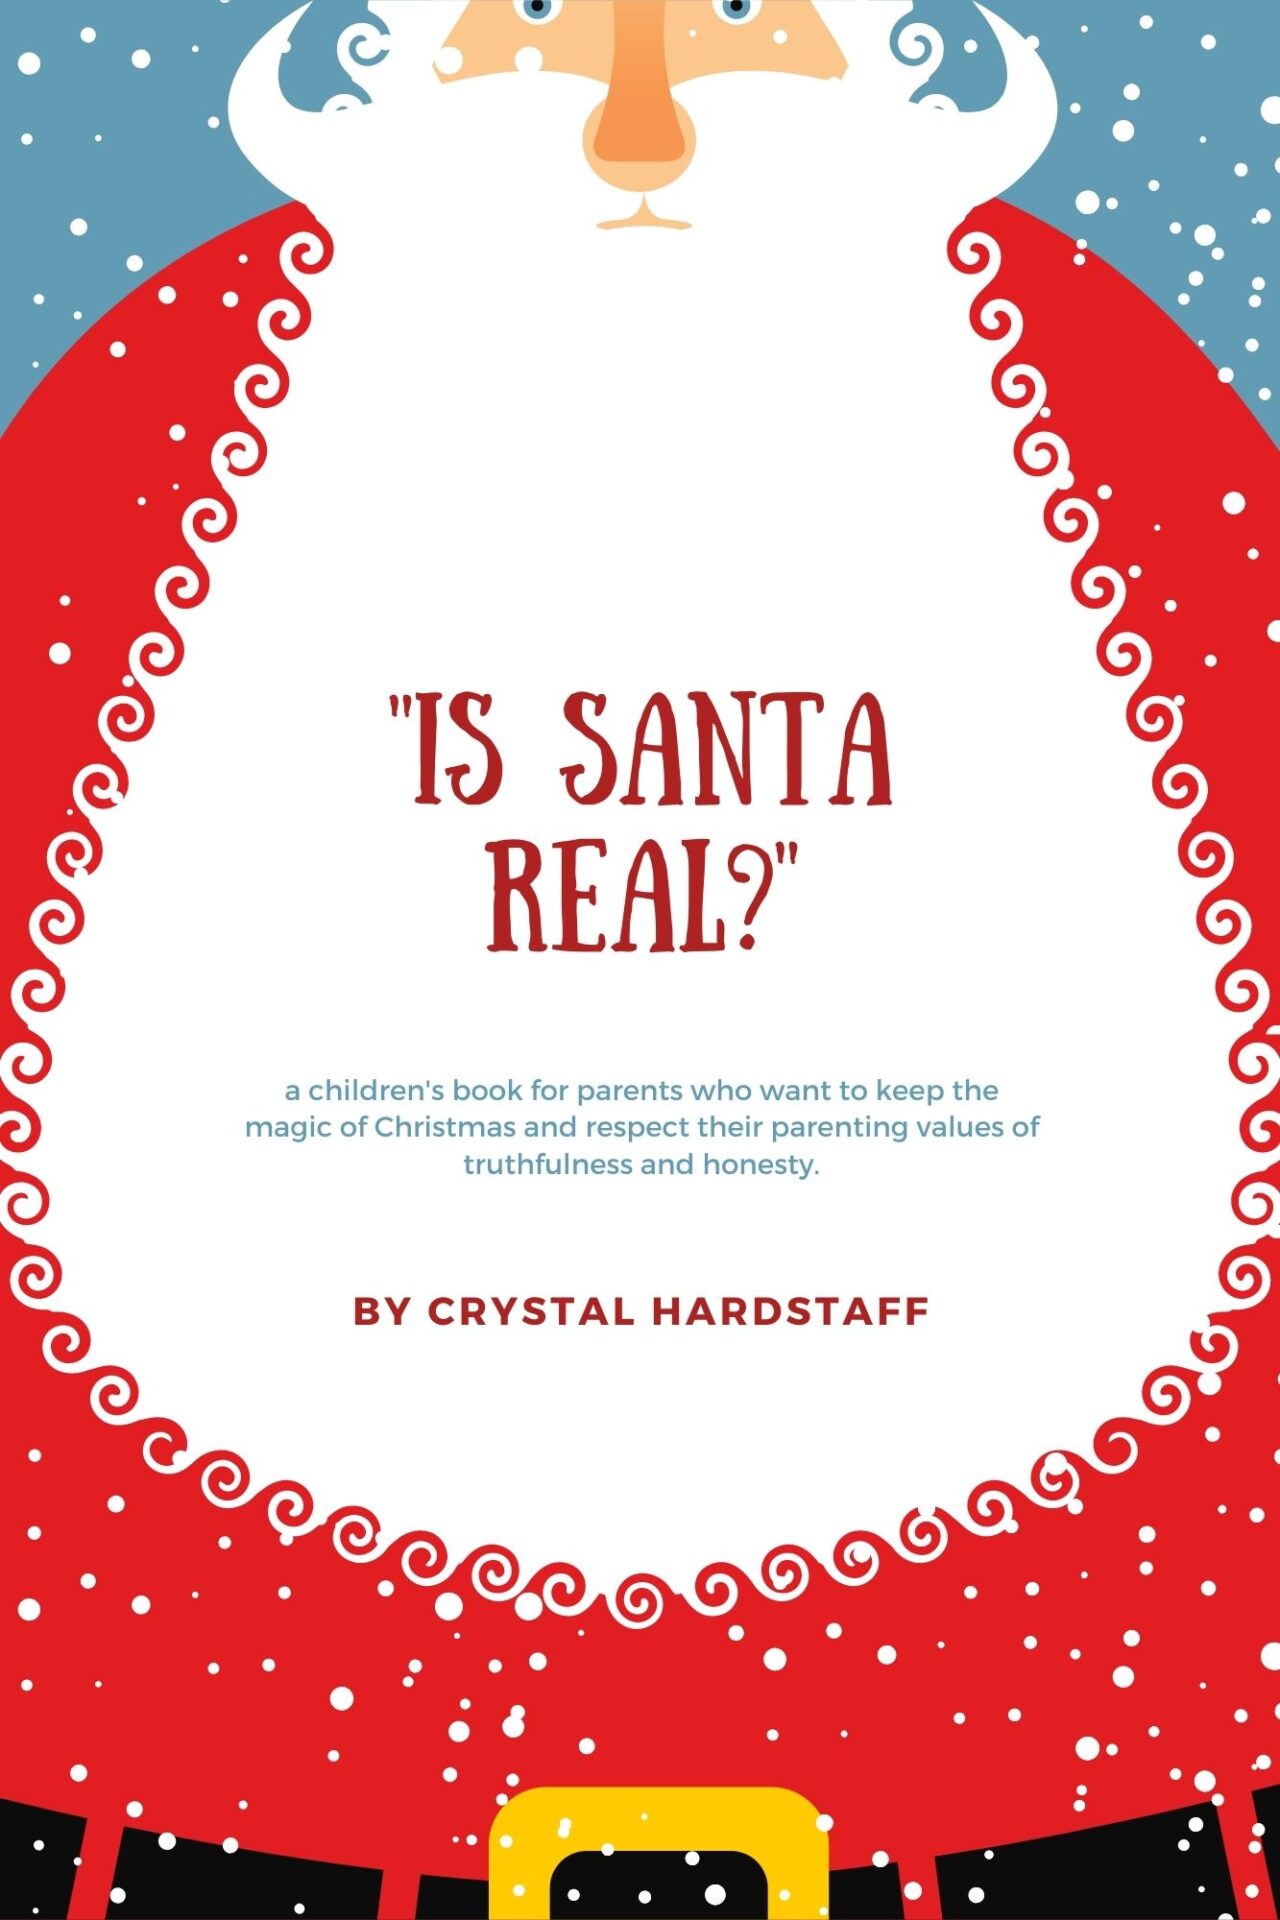 Is Santa real by Crystal Hardstaff 2021